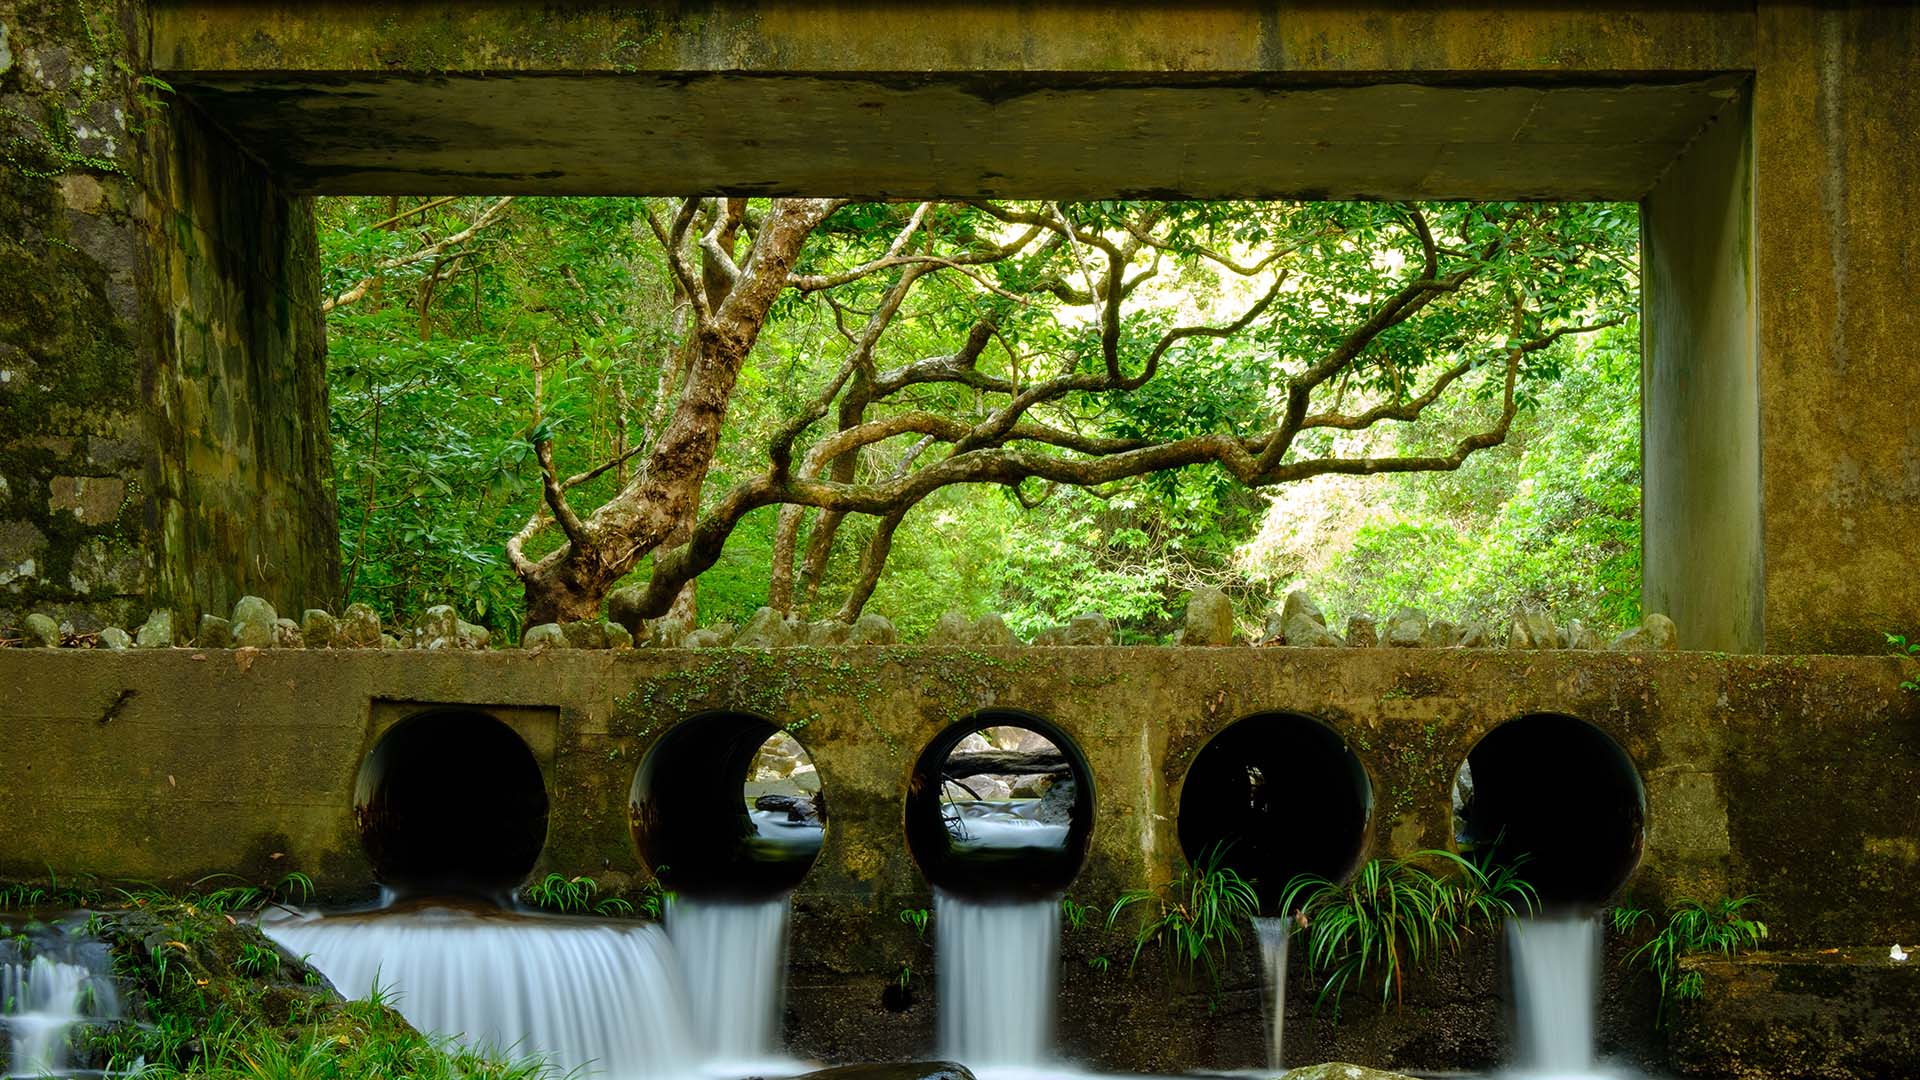 Water draining under a scenic bridge